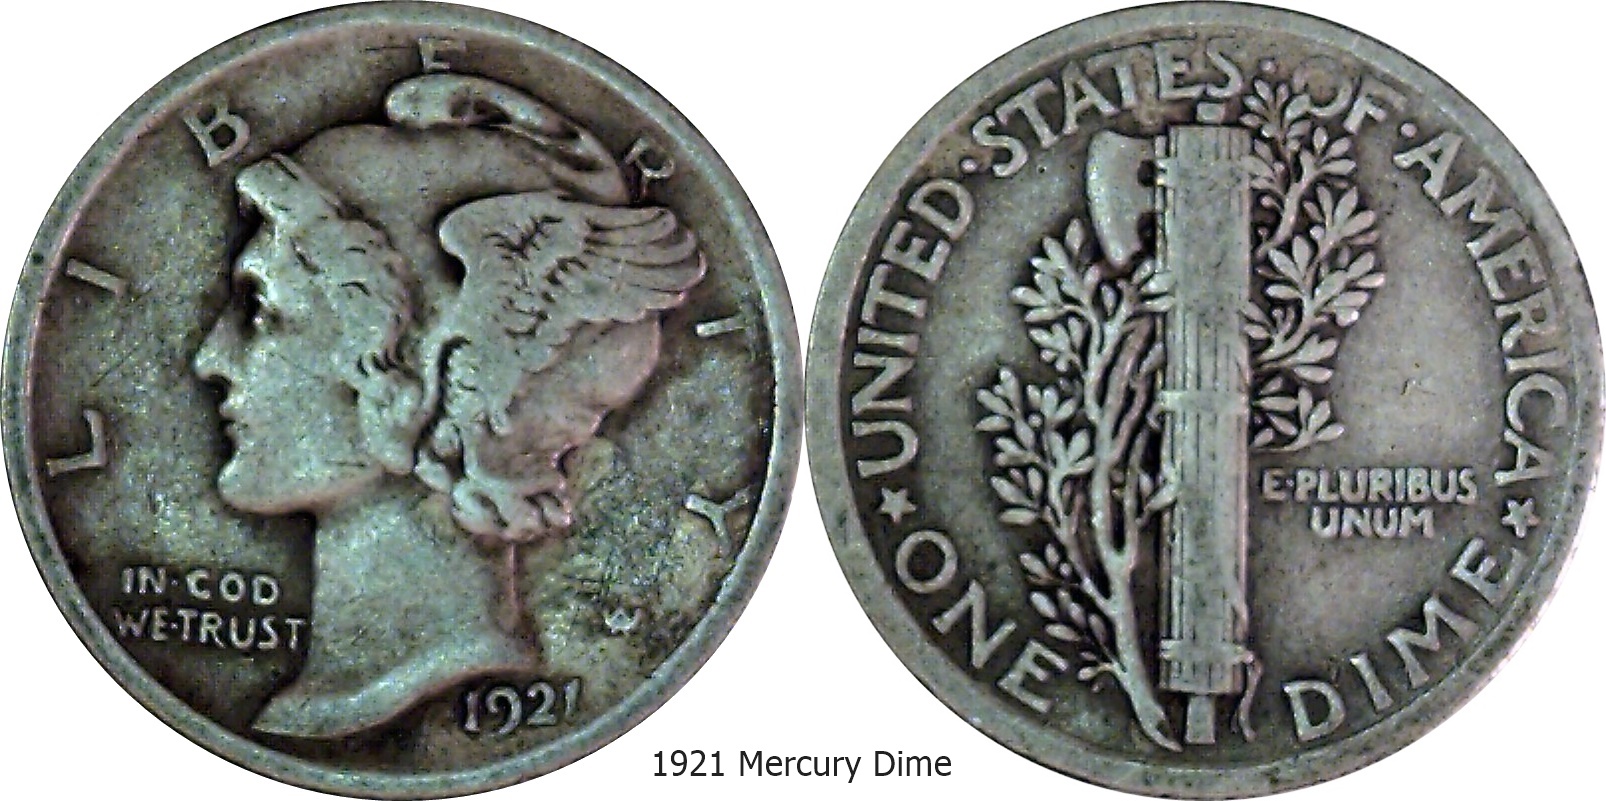 1921 Mercury dime.jpg